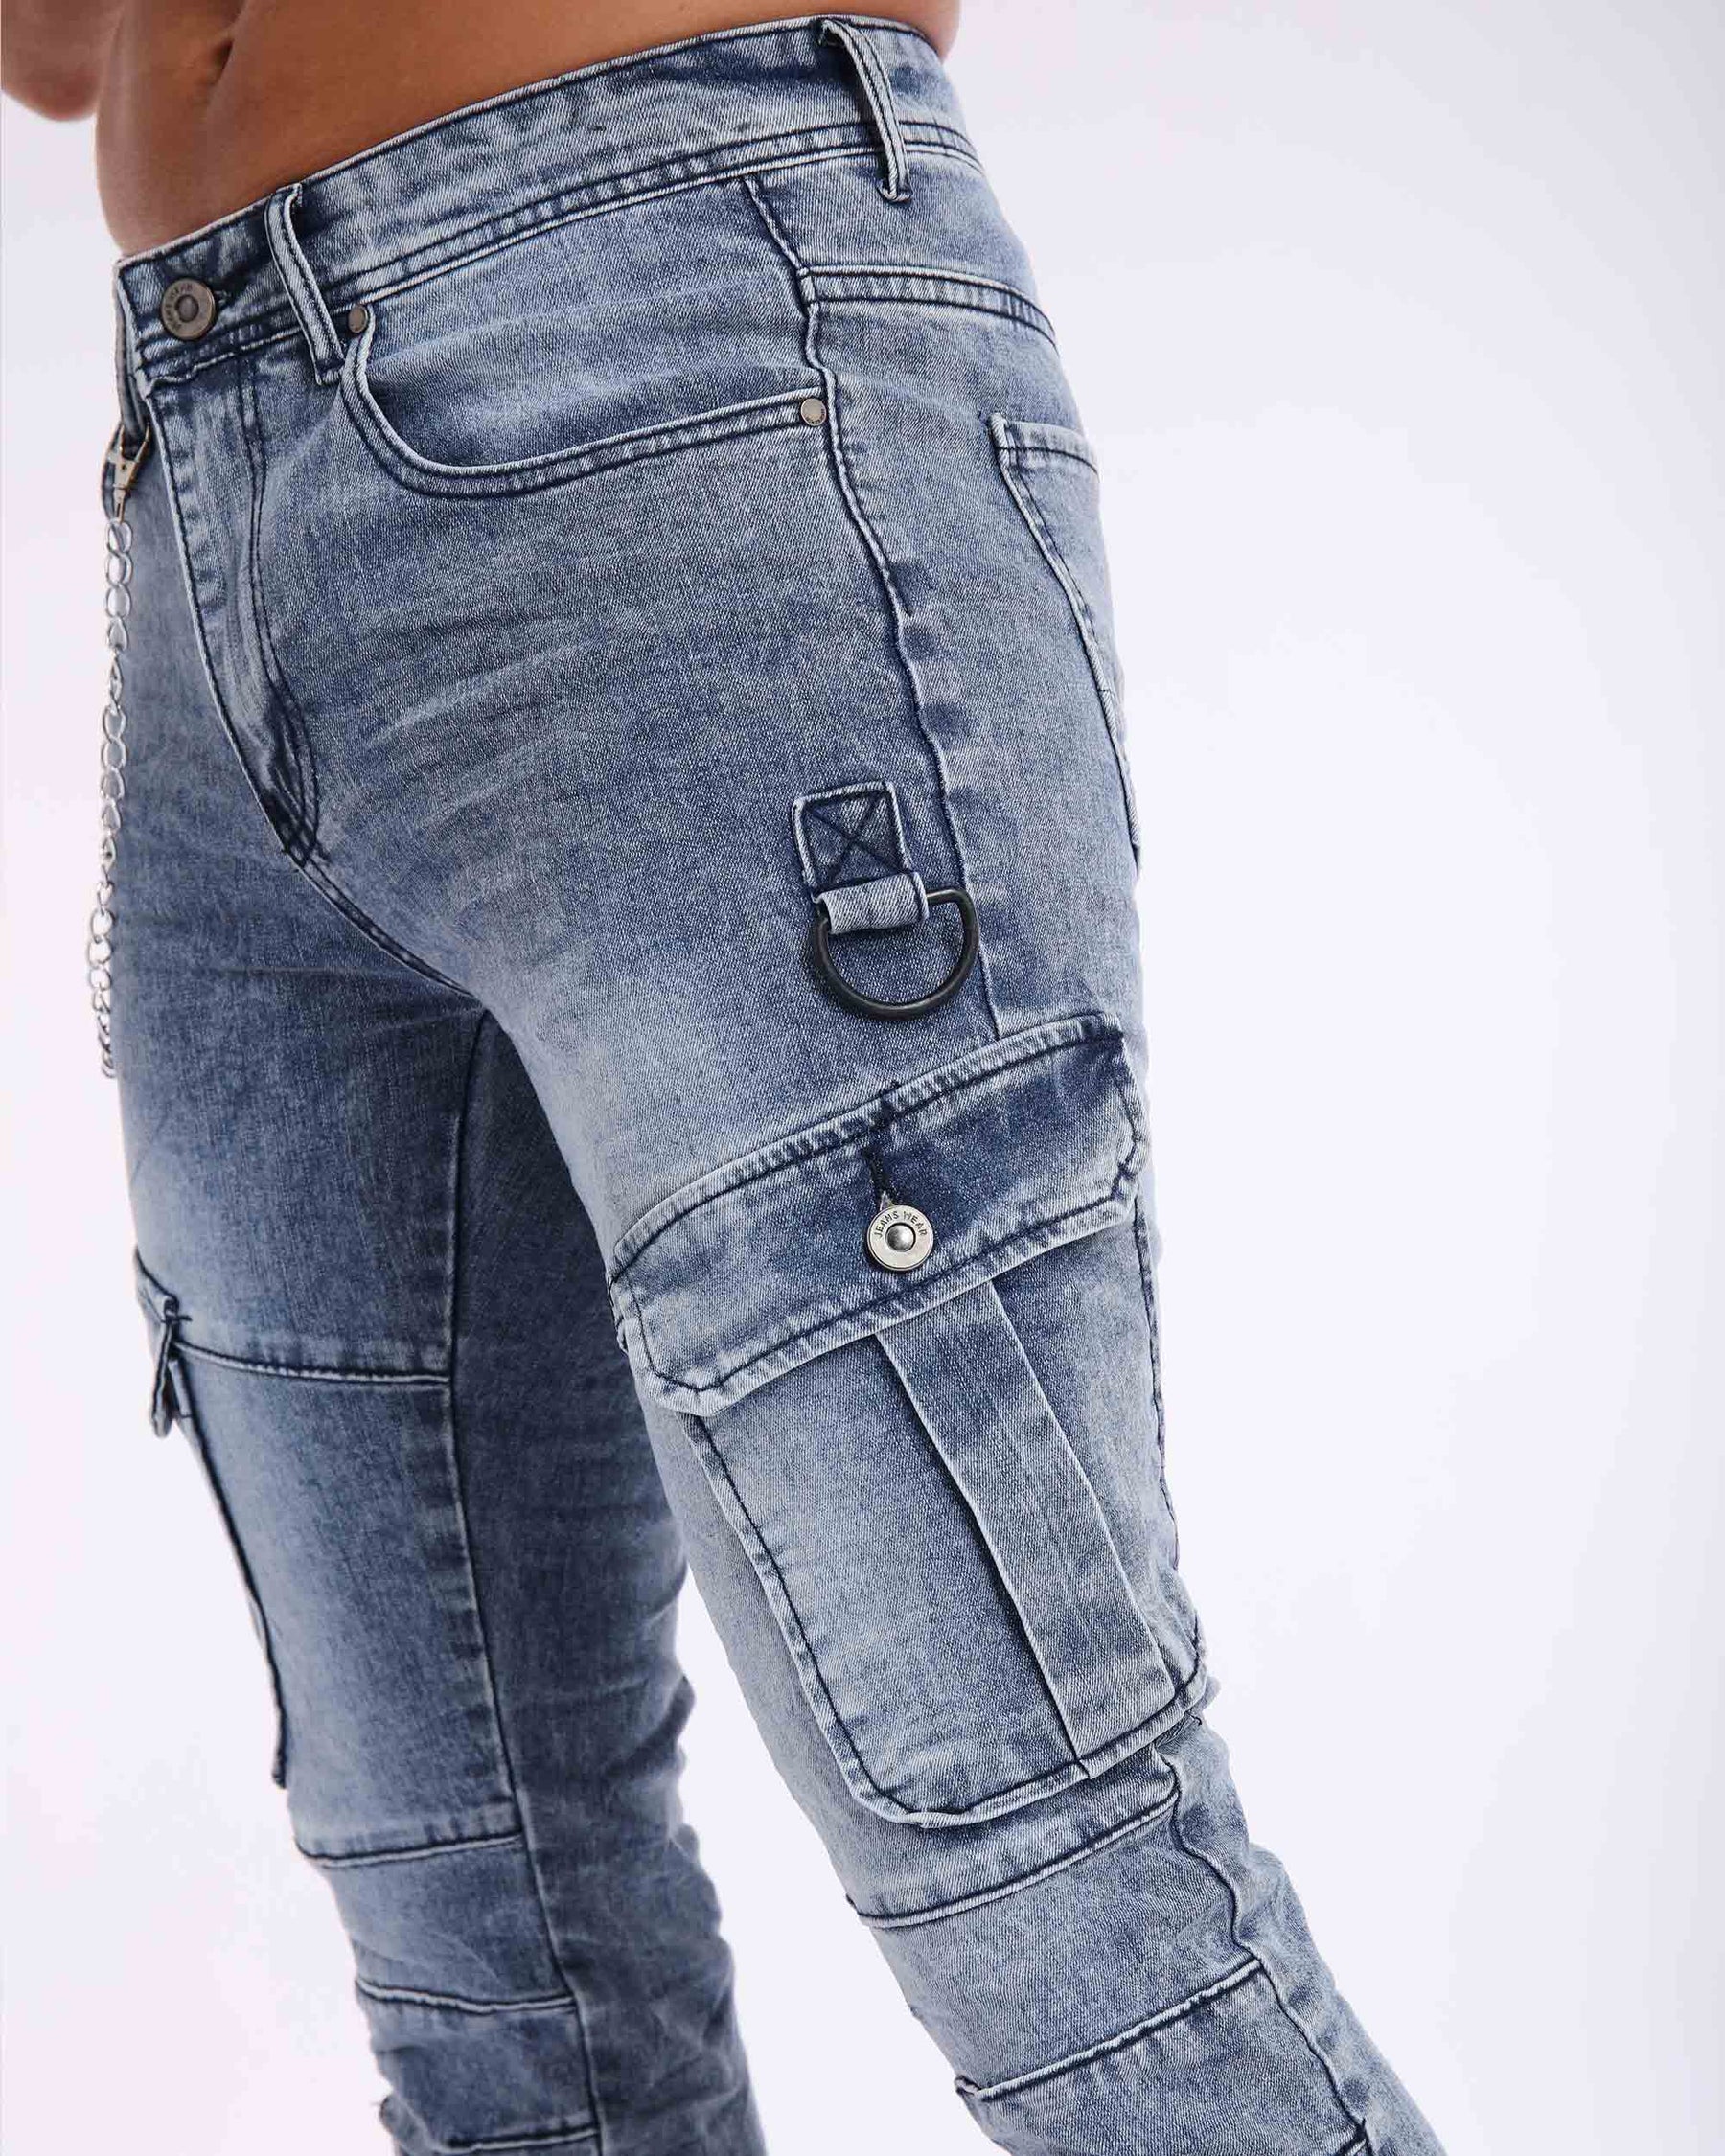 LOGEQI Zipper Blue Work Jeans